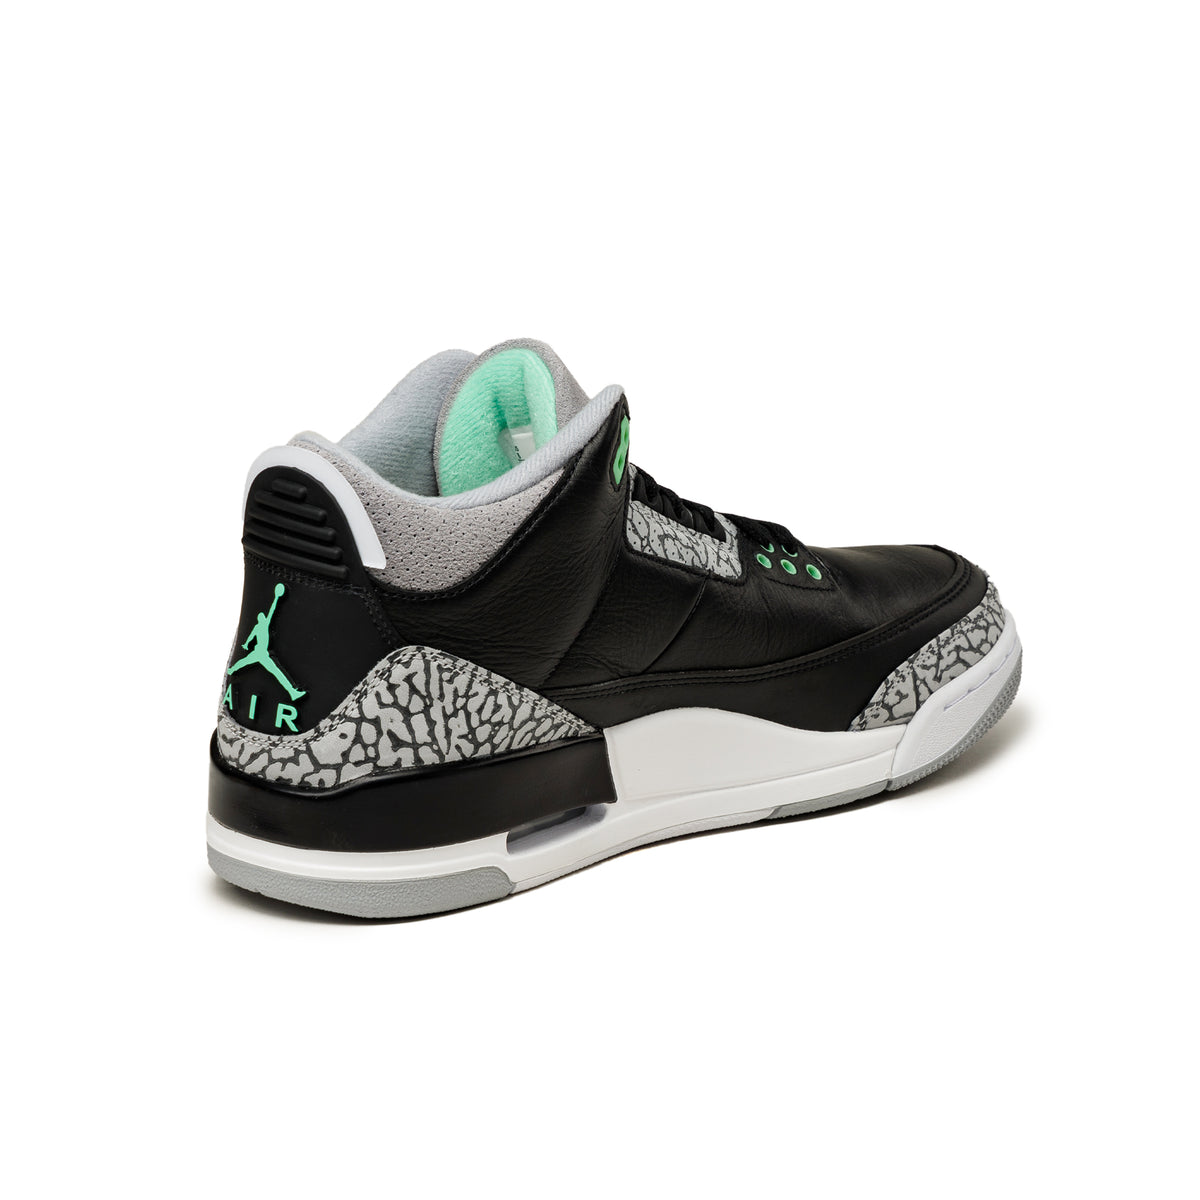 Nike Air Jordan 3 Retro *Green Glow* » Buy online now!